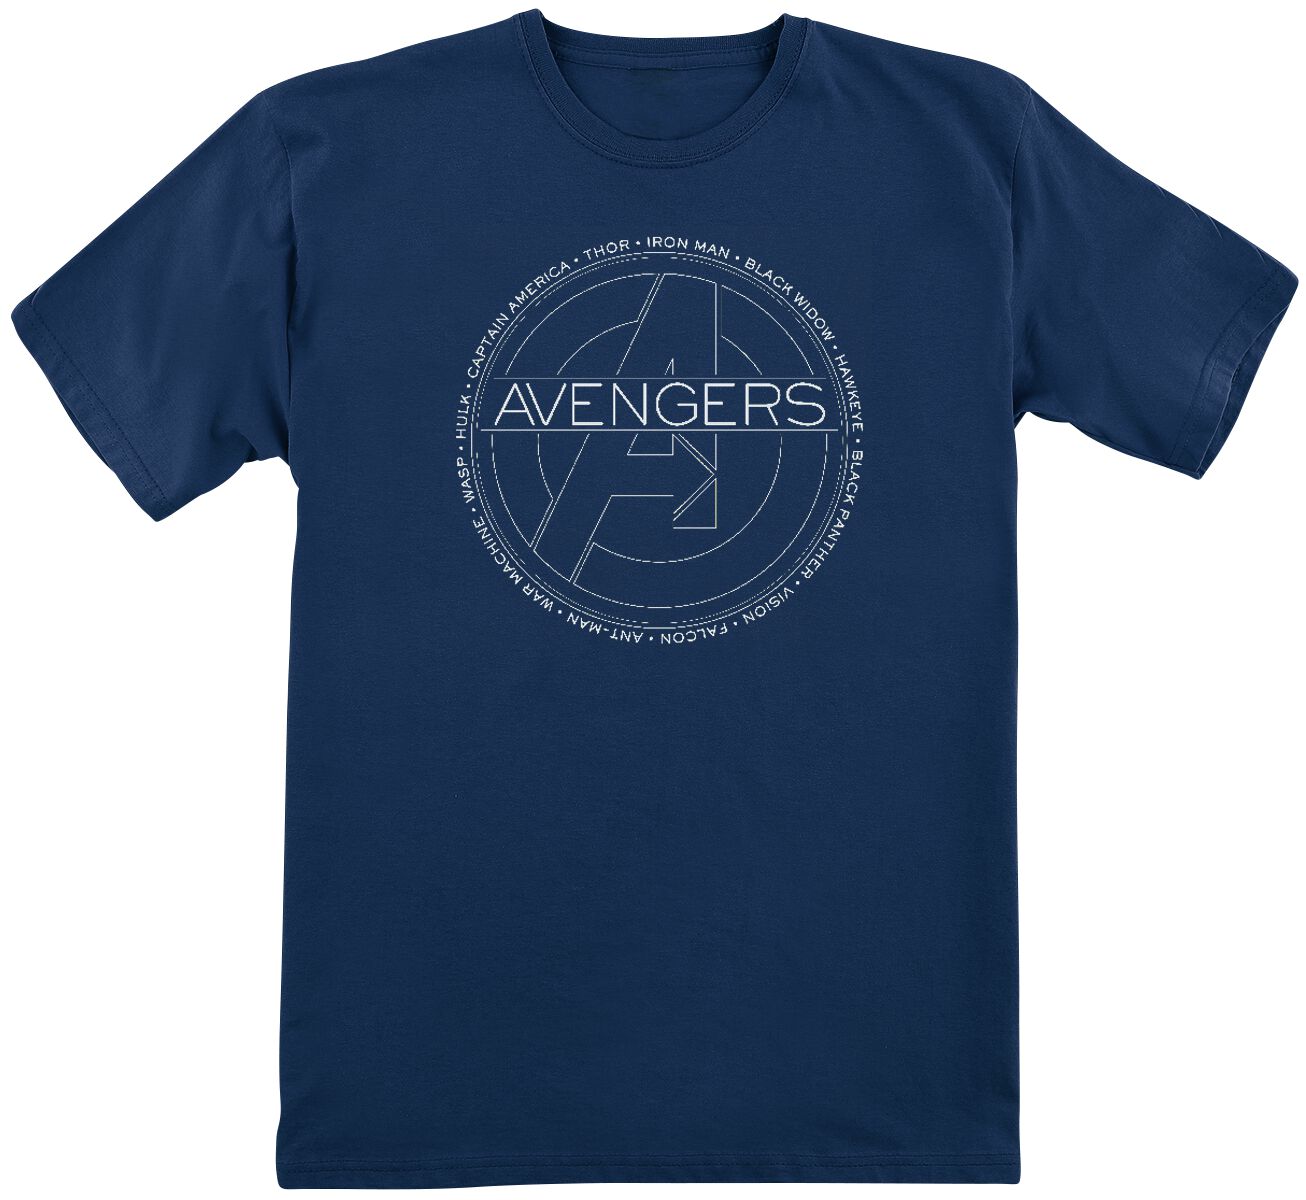 Avengers Kids - Avengers T-Shirt blue